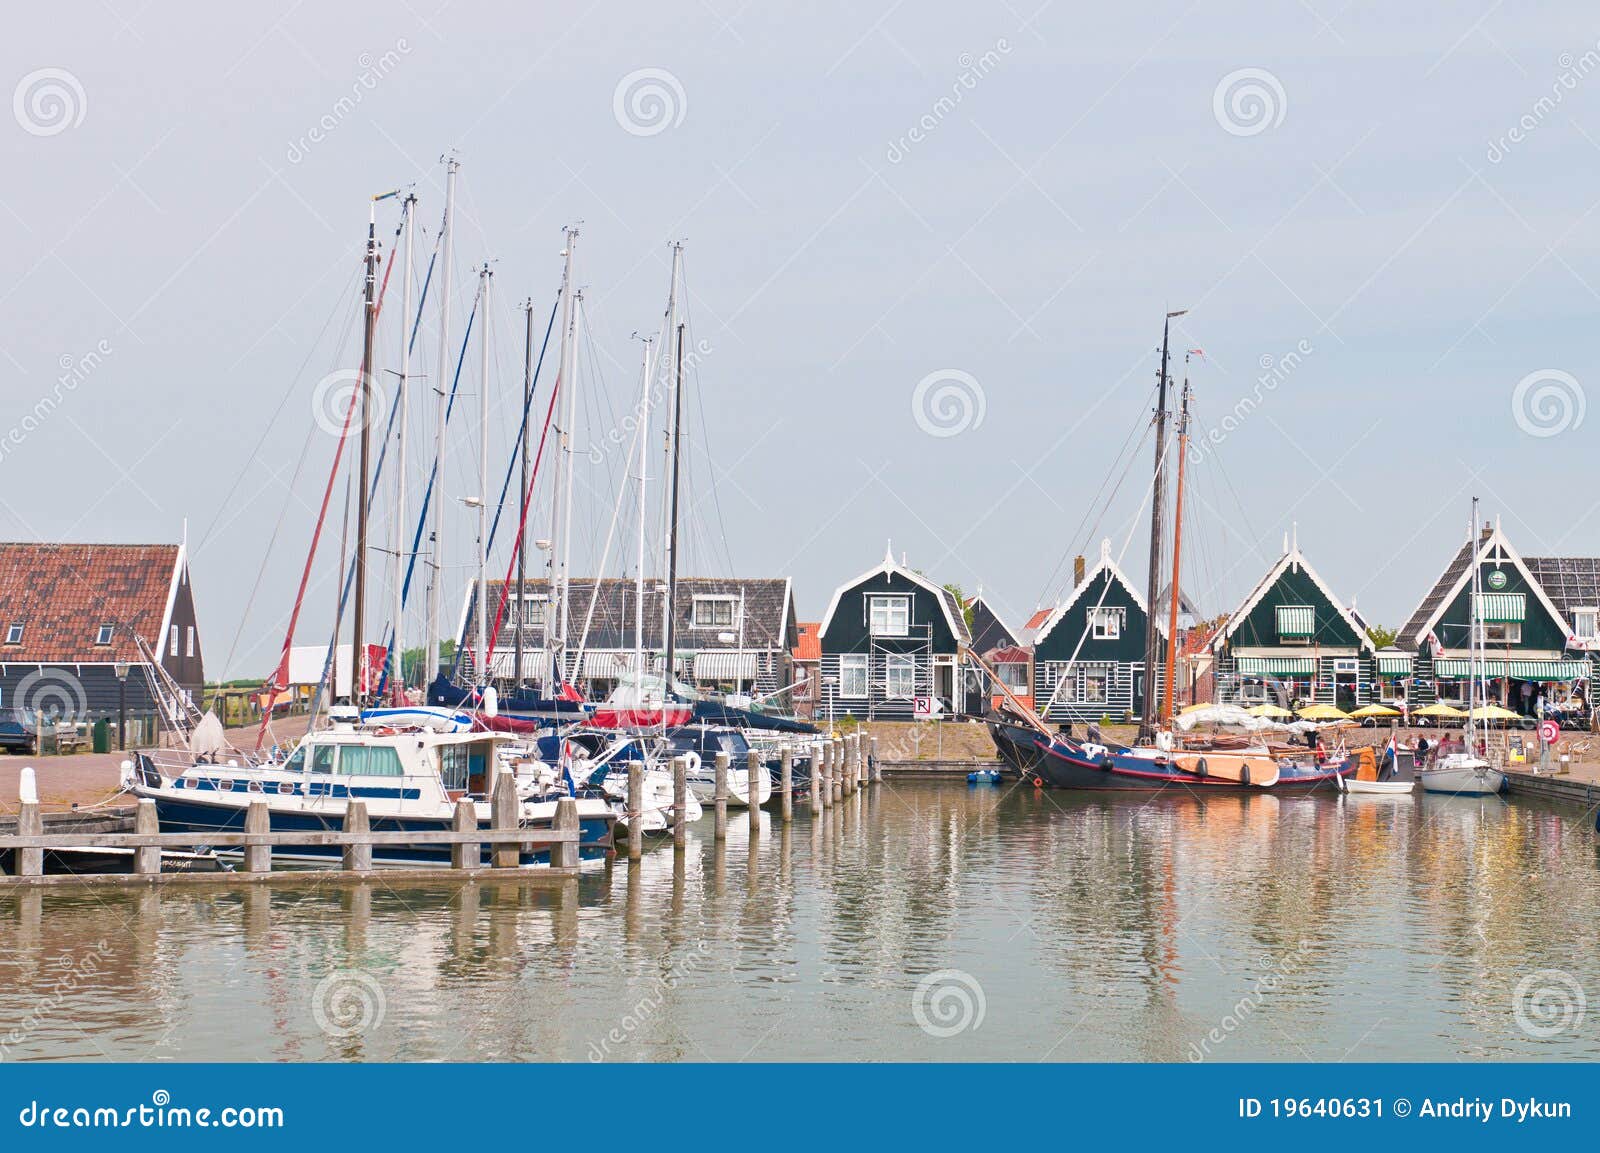 Sailboats in Marken dock, Netherlands.